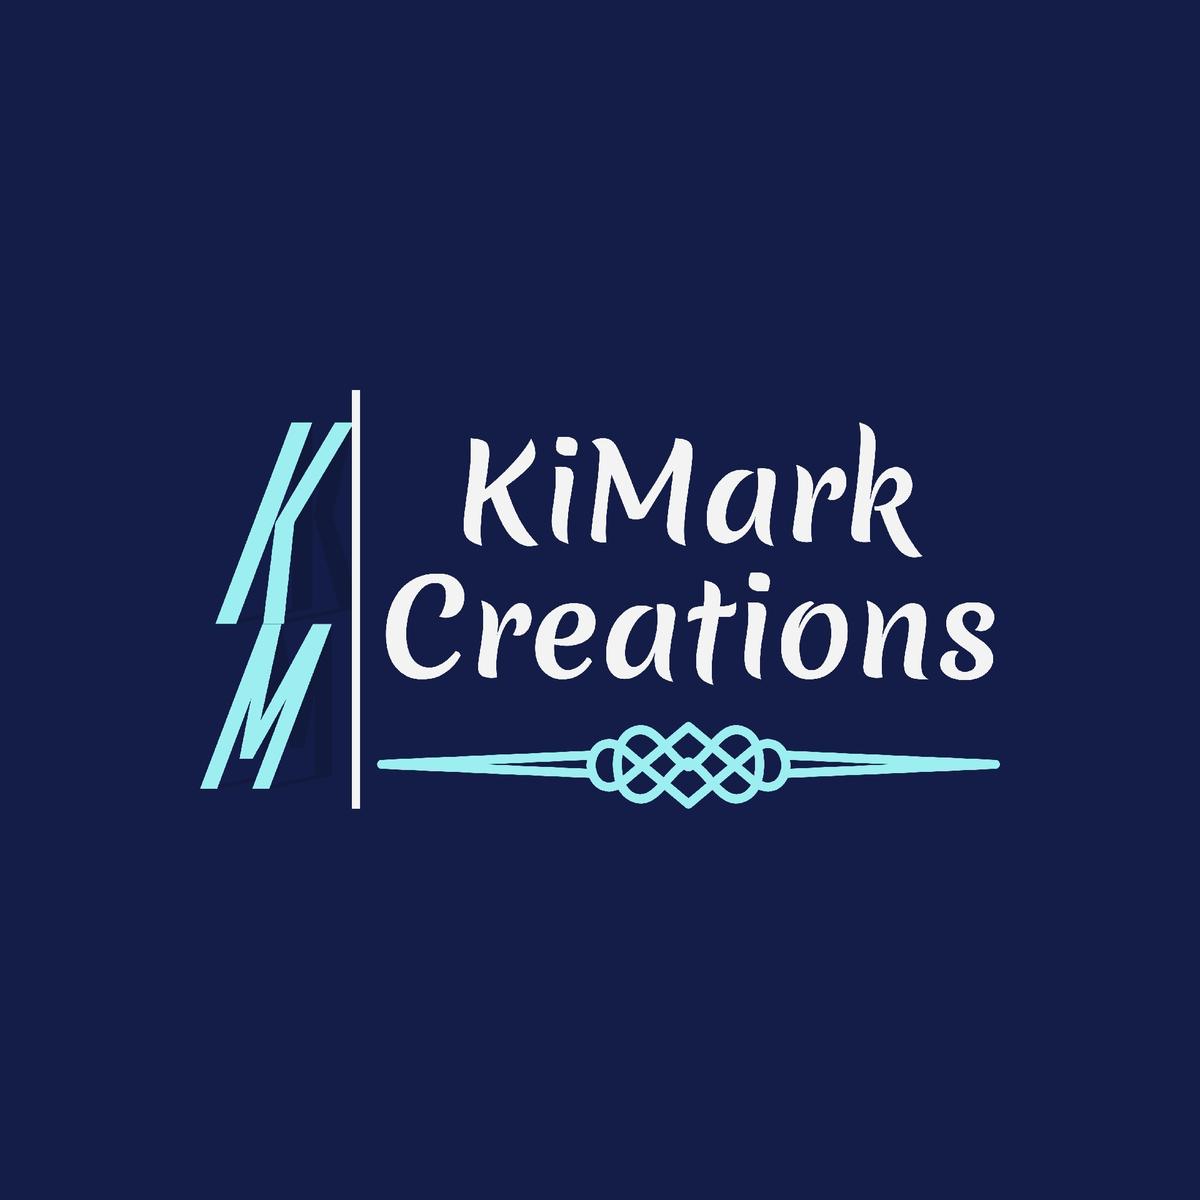 KiMark Creation